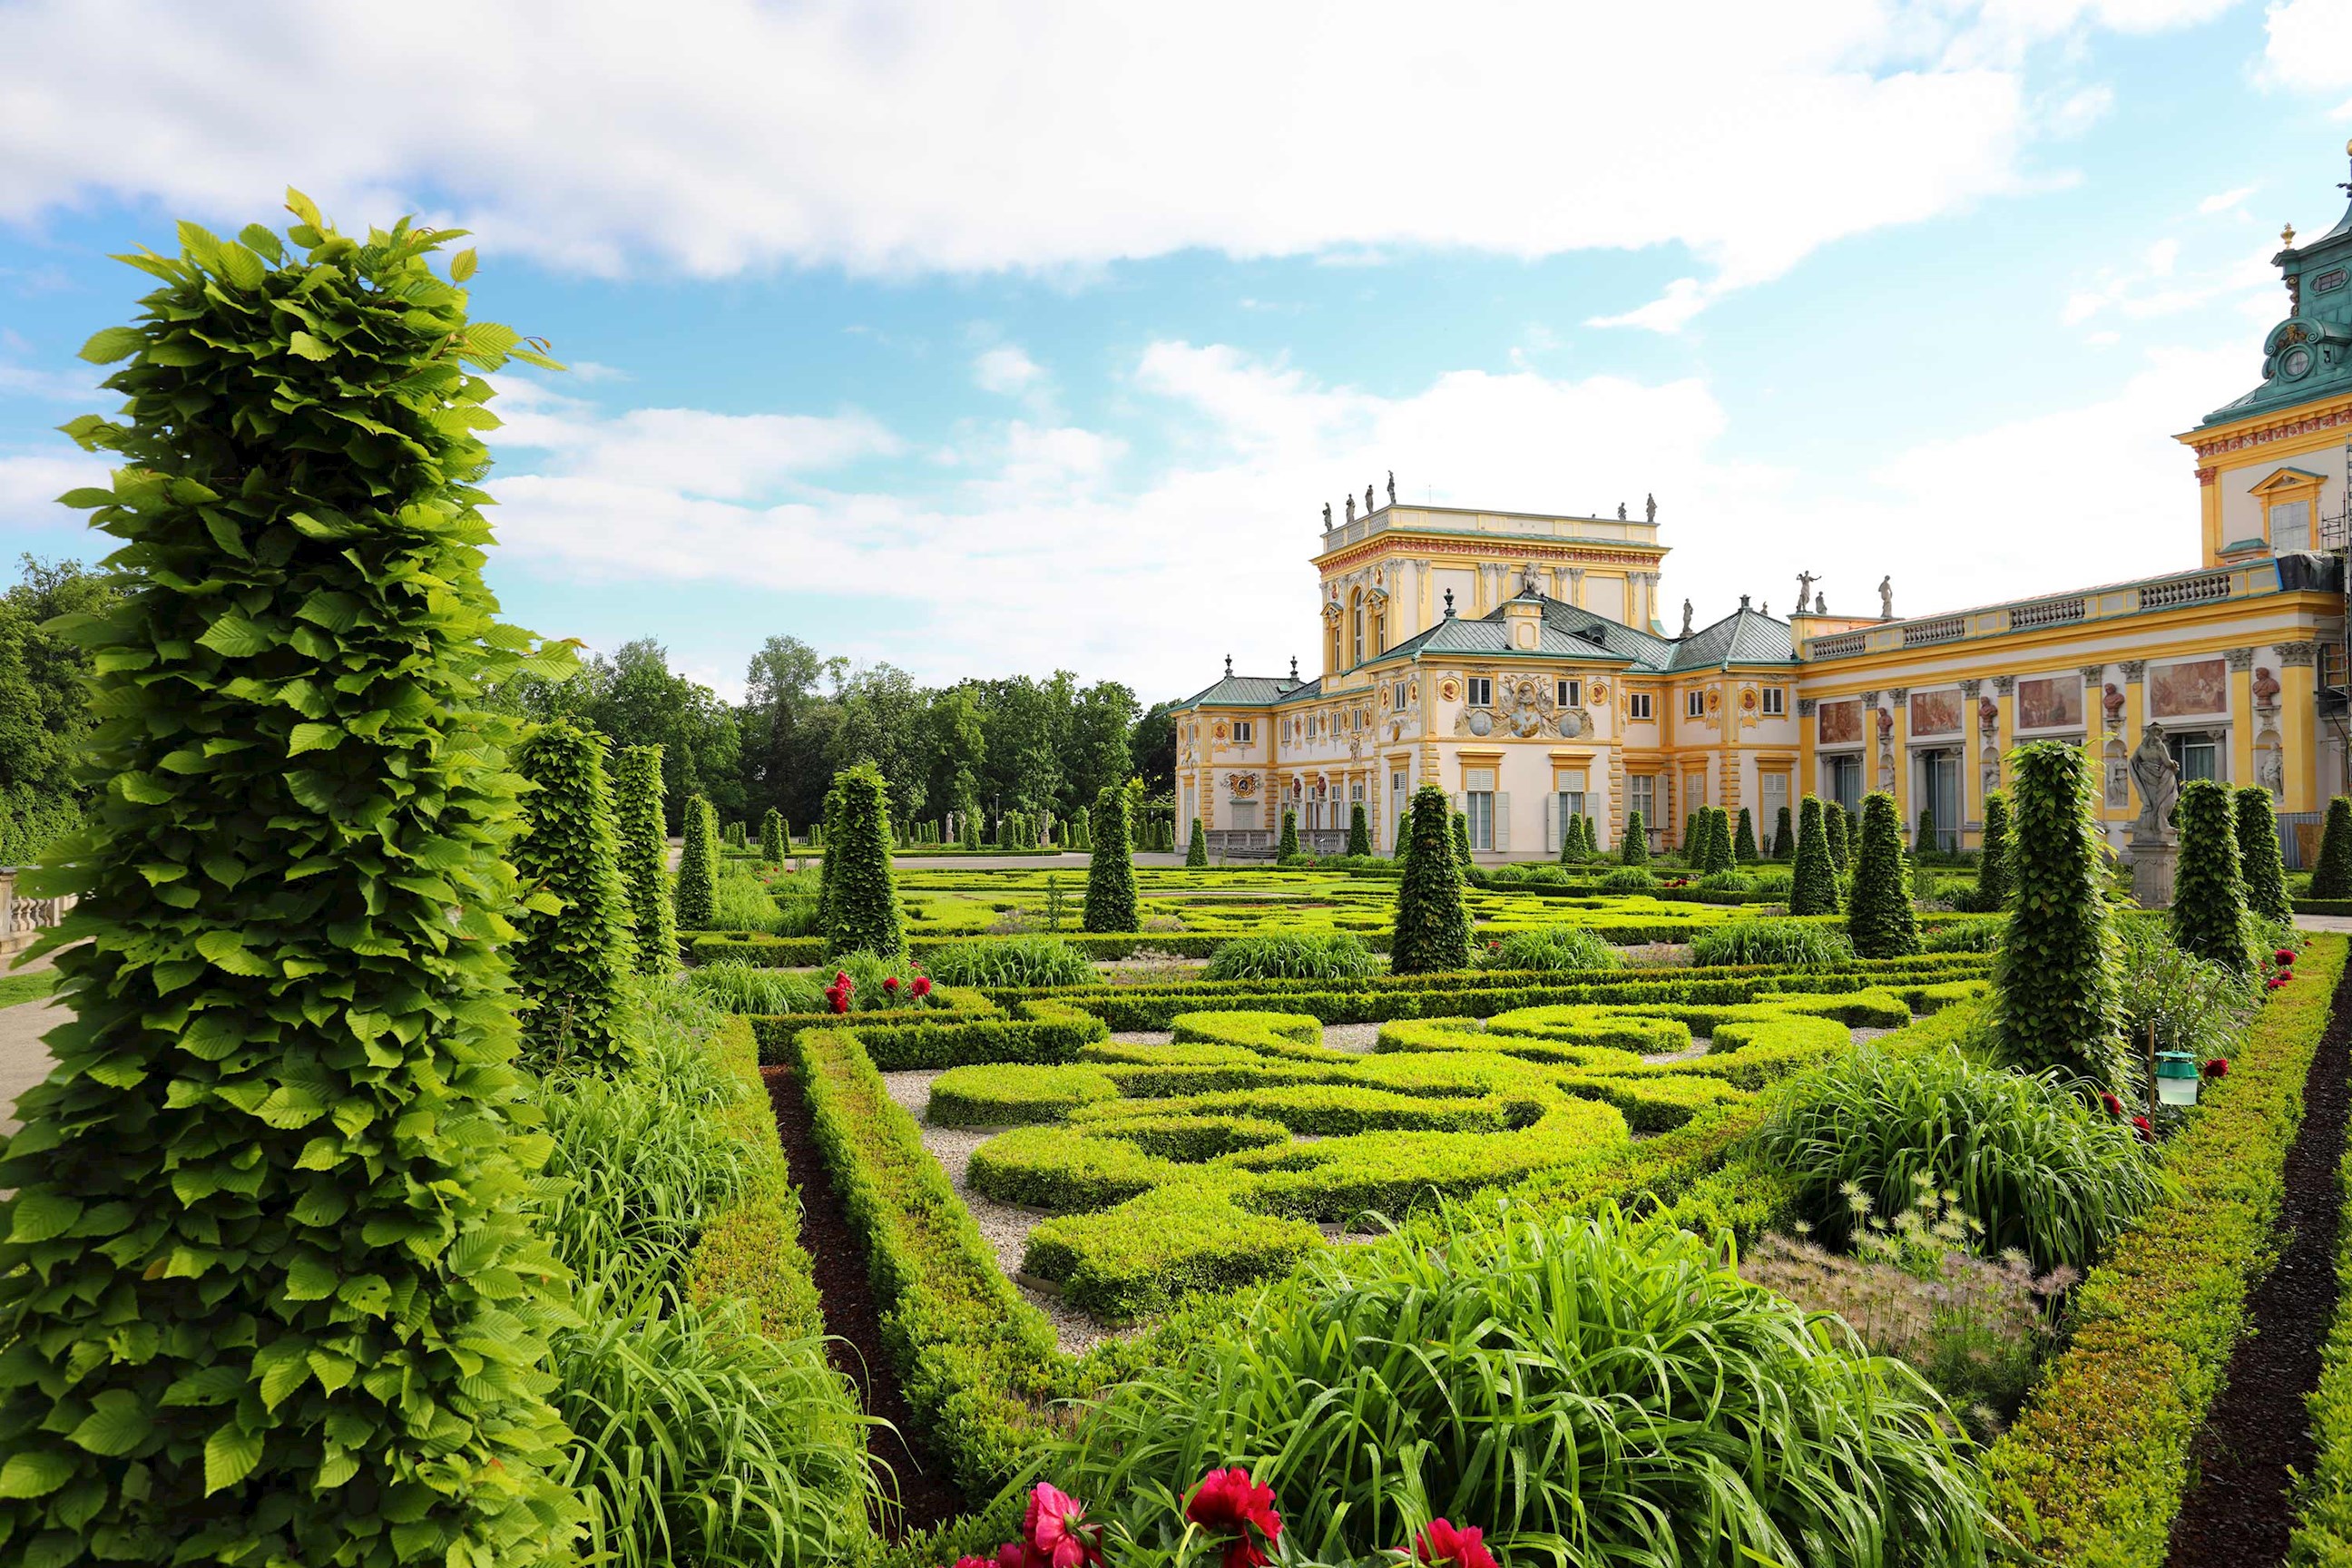 Visit Wilanow Palace in Warsaw, Poland